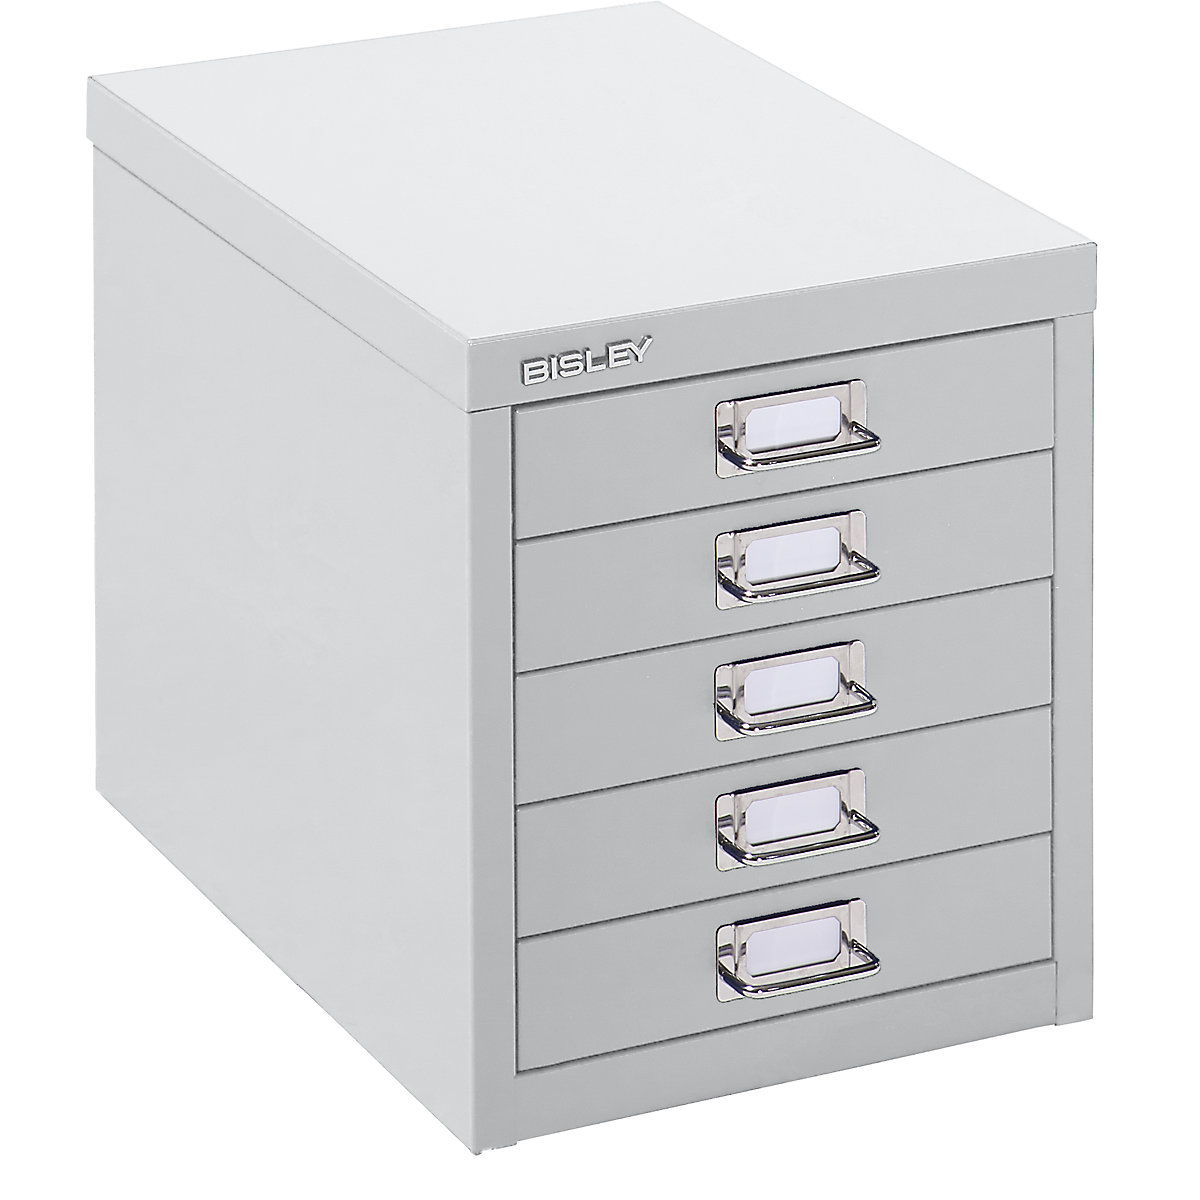 MultiDrawer™ 39 series – BISLEY, A4, 5 drawers, light grey-6